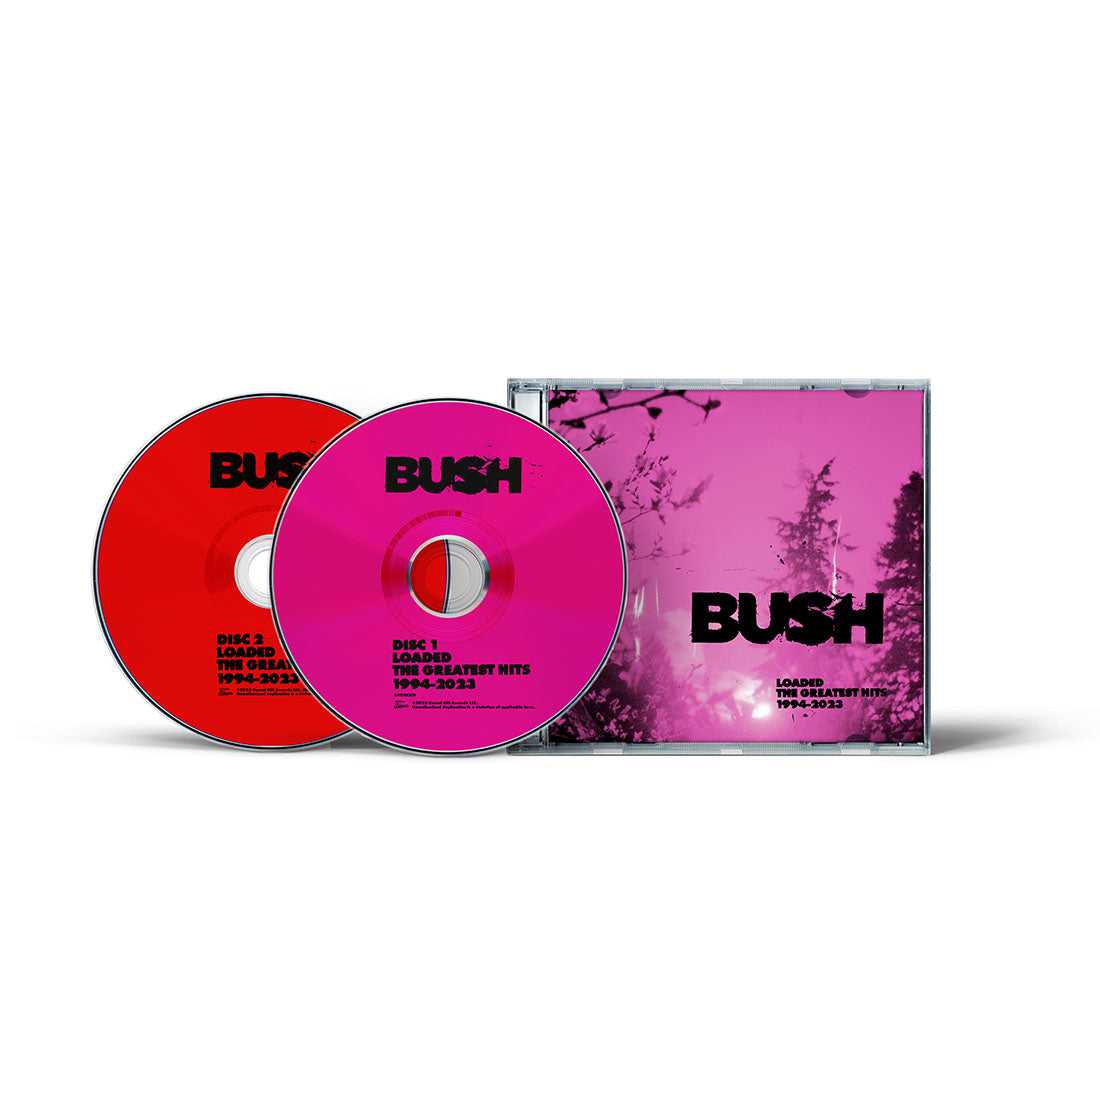 Bush - Loaded: The Greatest Hits 1994-2023: 2CD